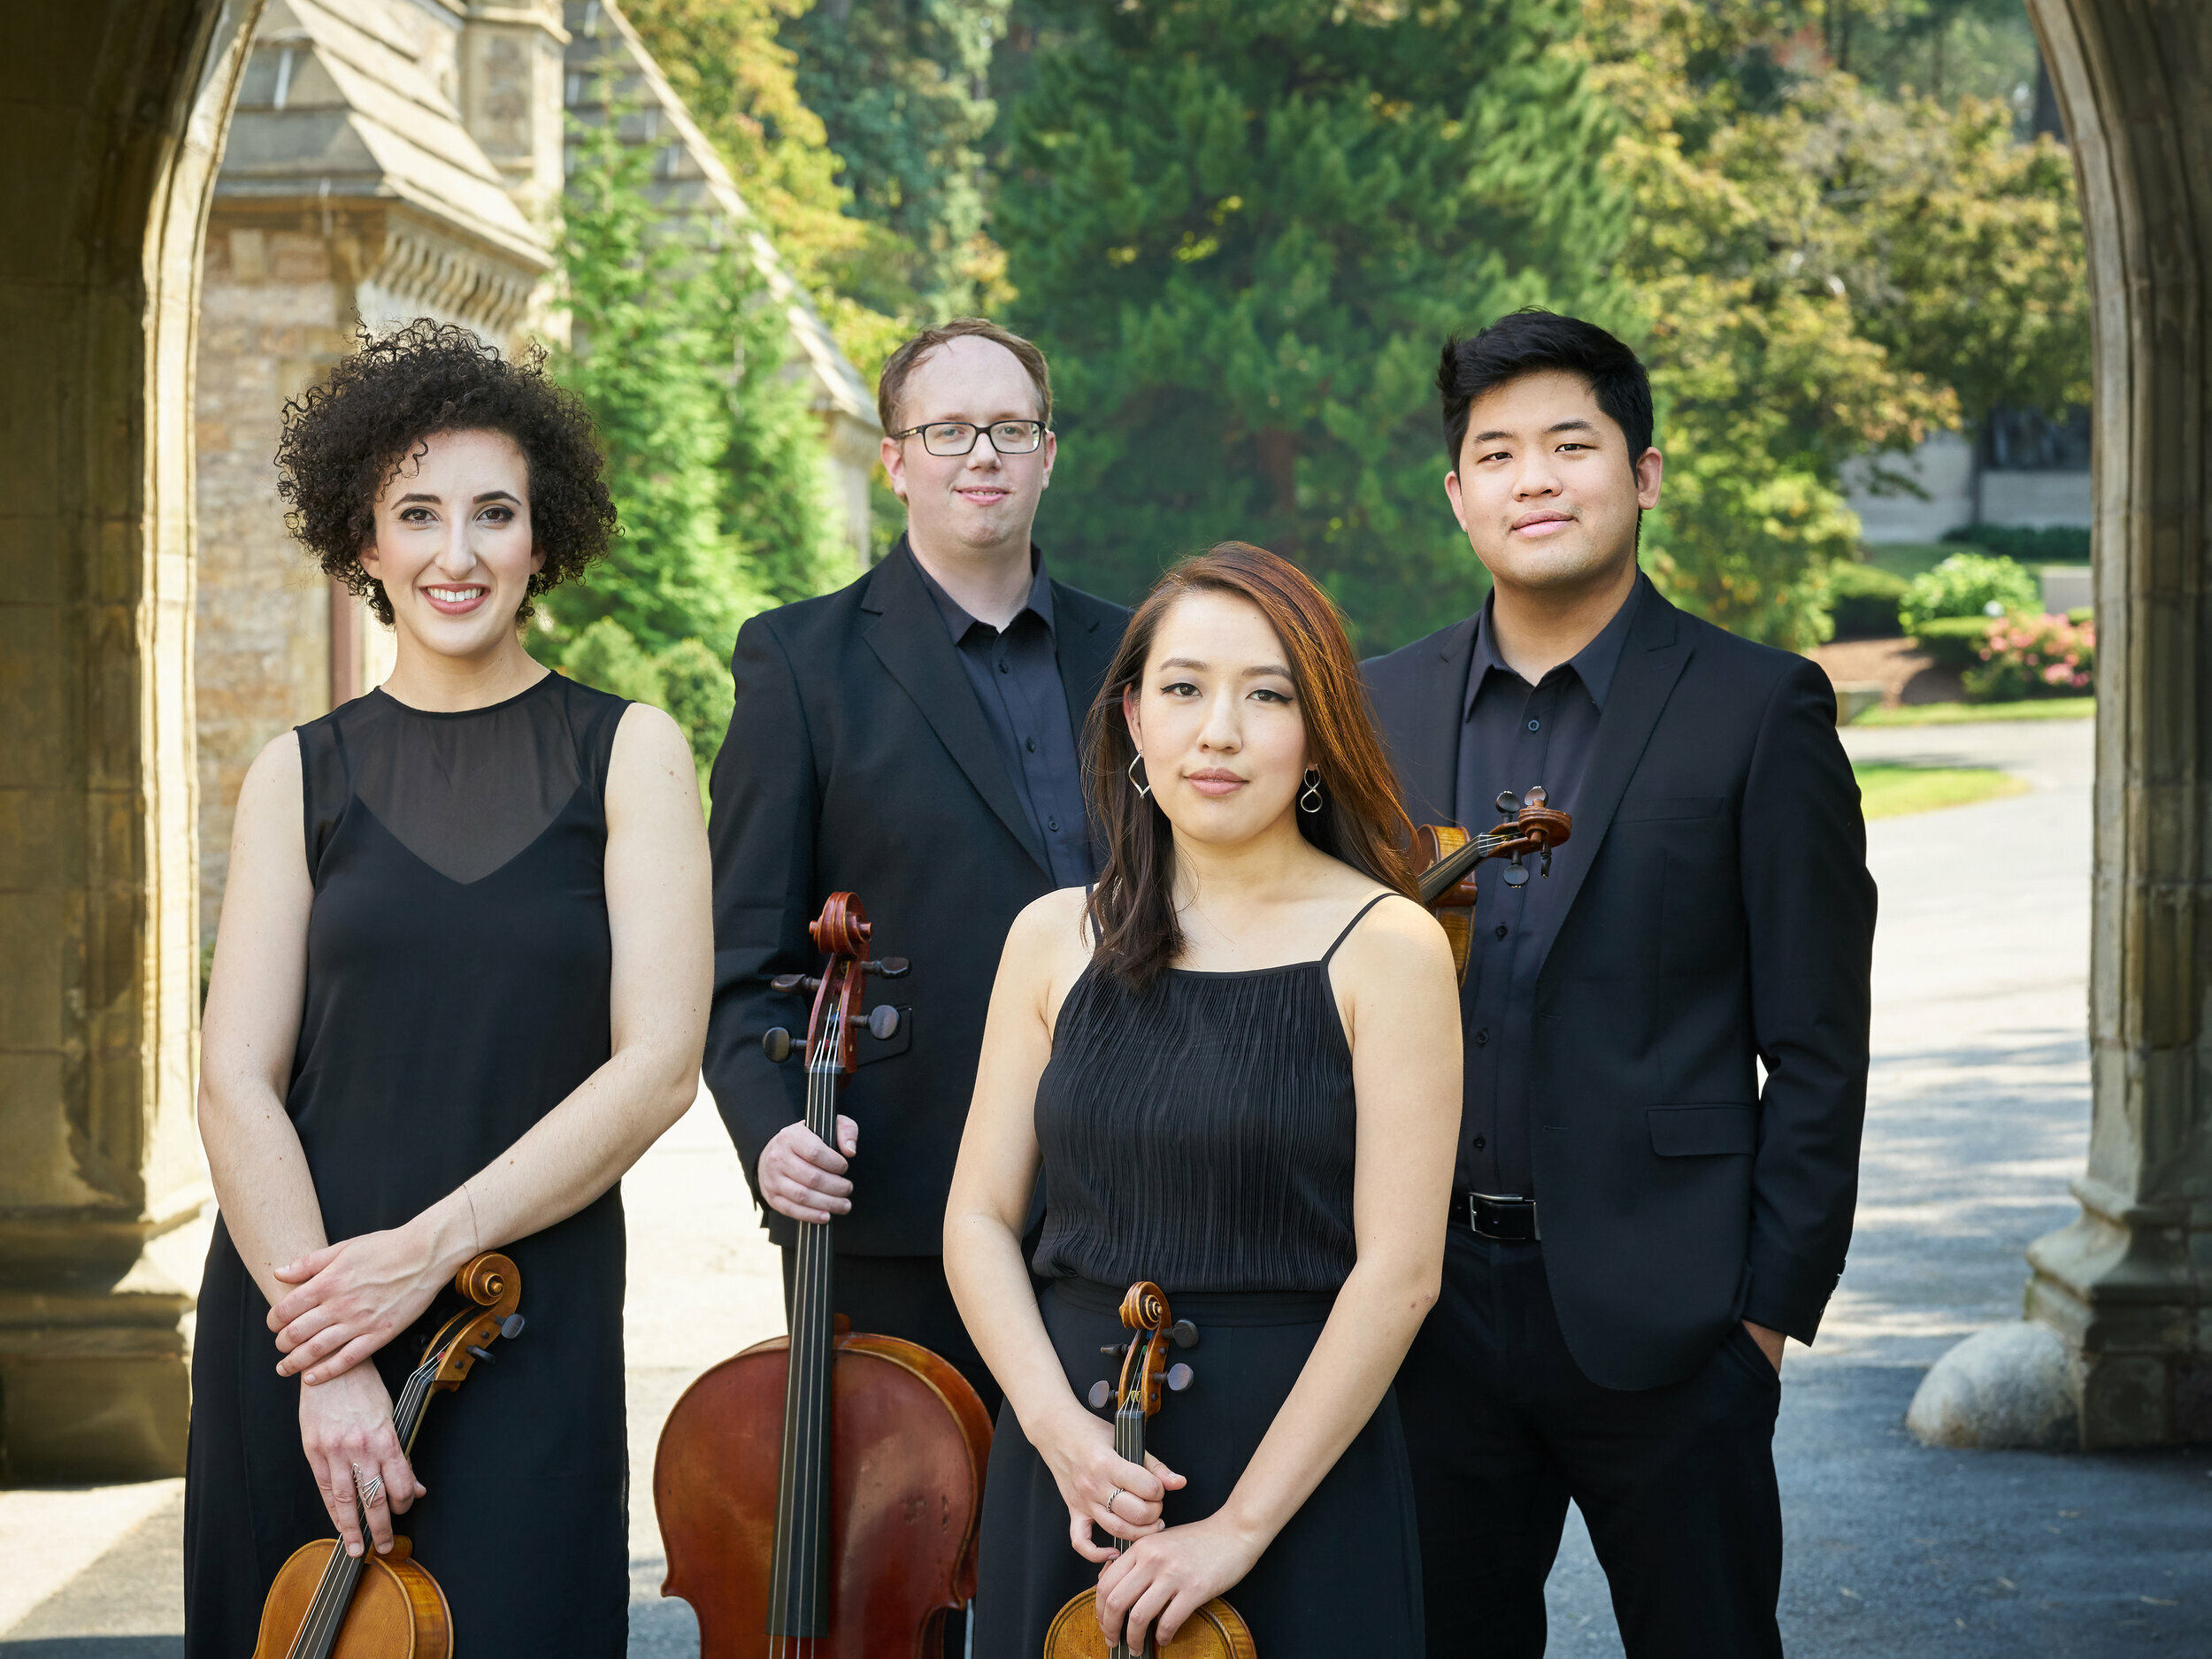 Verona Quartet, from left: Abigail Rojansky, viola; Jonathan Dormand, cello; Dorothy Ro, violin; Jonathan One, violin. KAUPO KIKKAS